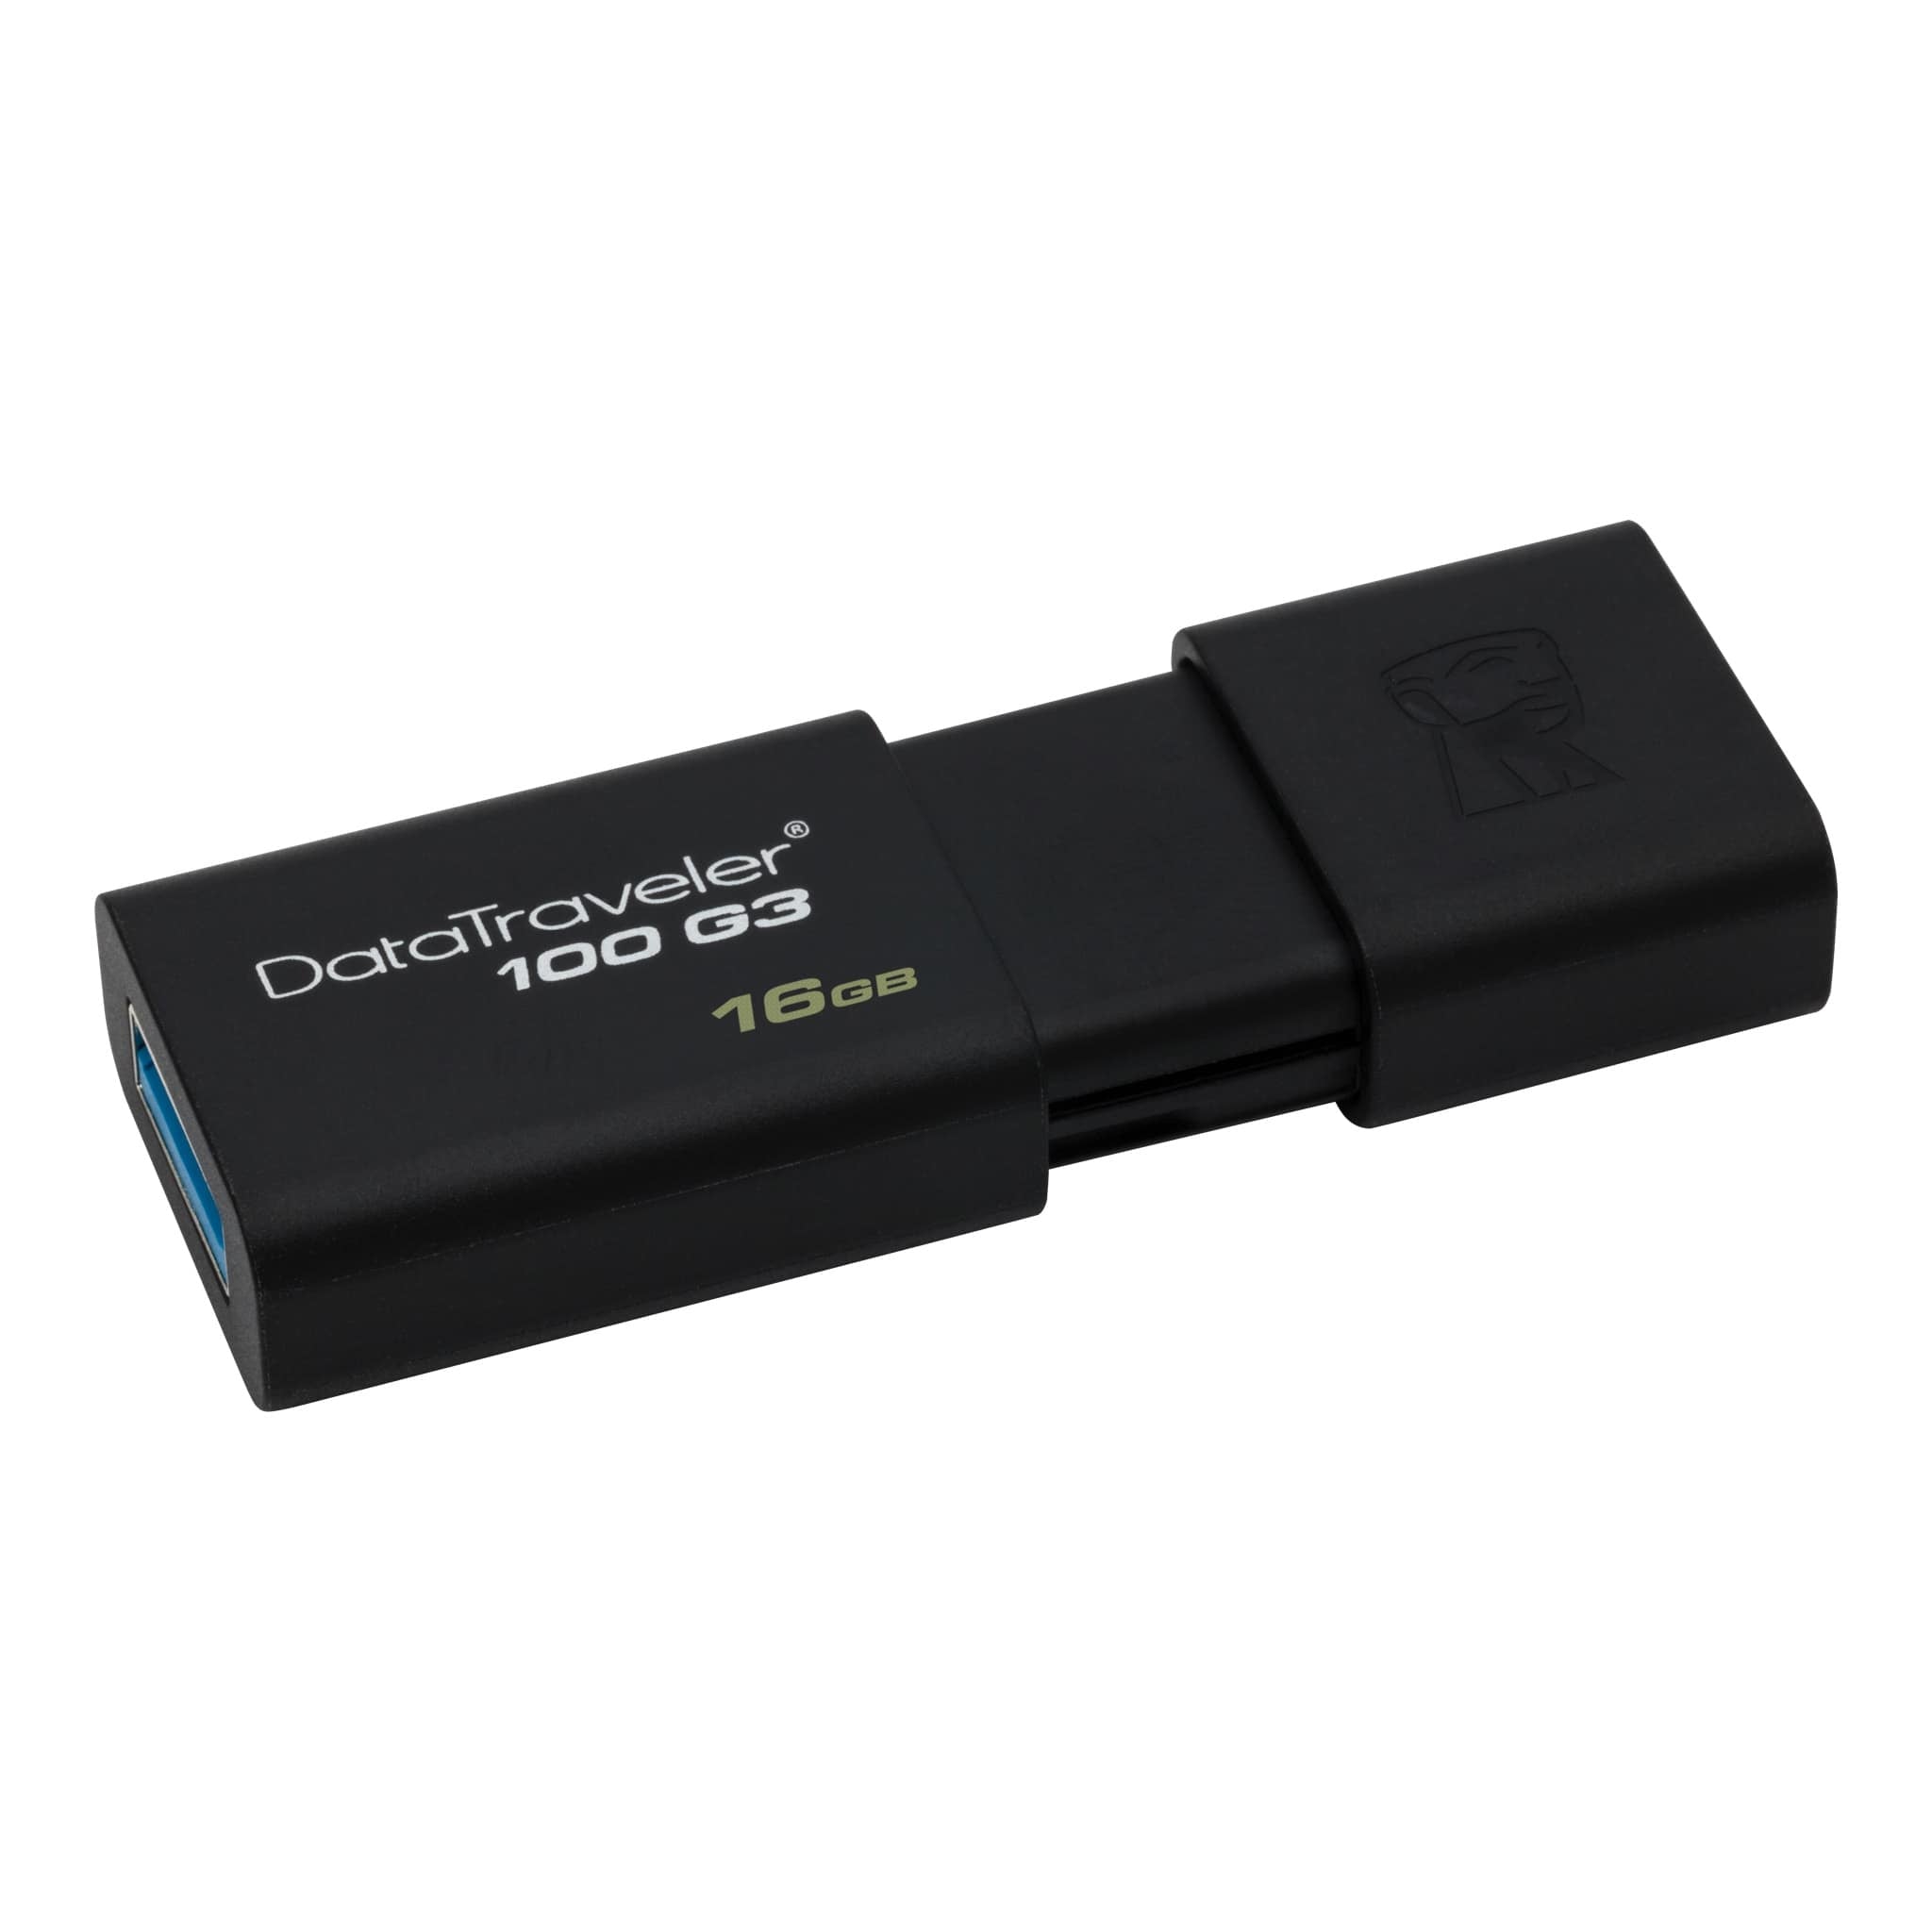 KINGSTON DT 100 G3 16GB USB 3.1